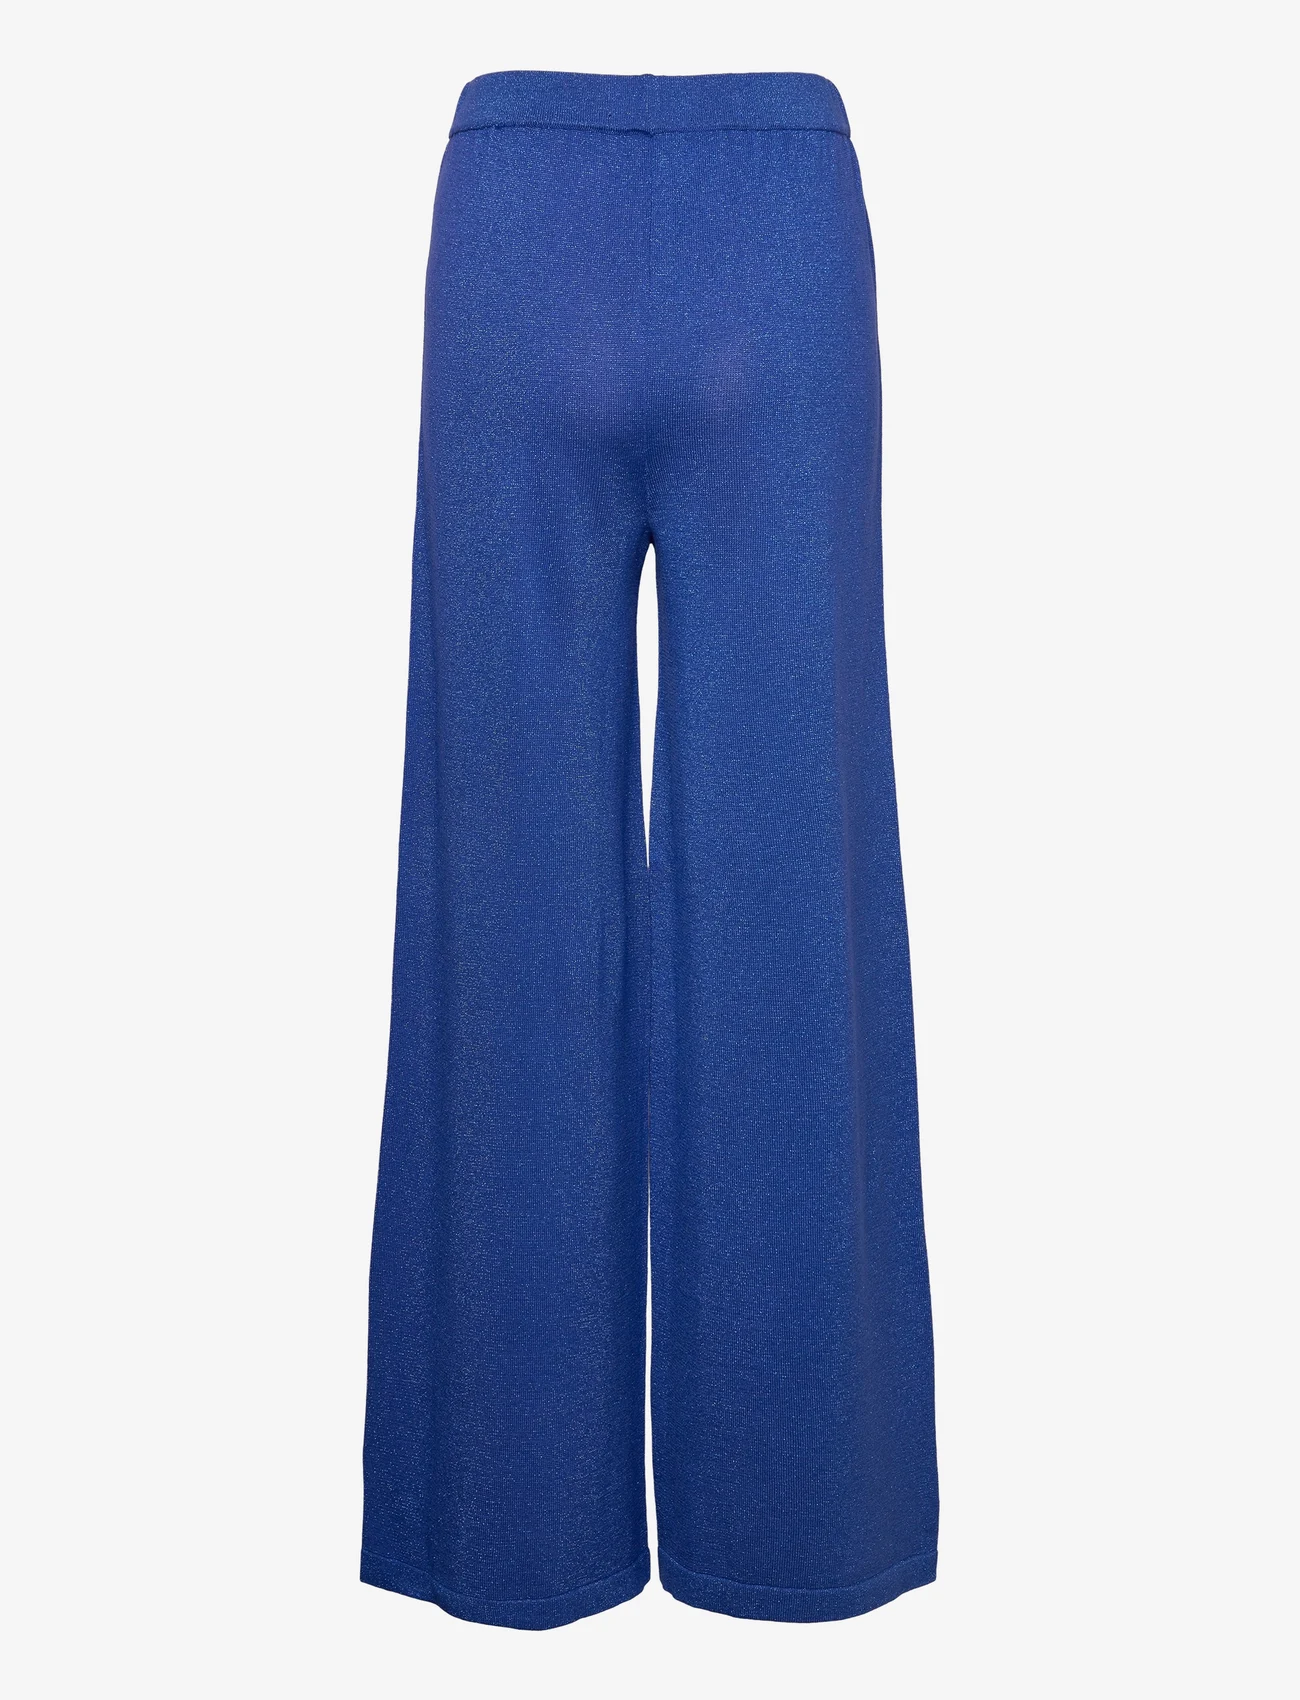 Lollys Laundry - Agadir Pants - plačios kelnės - 97 neon blue - 1